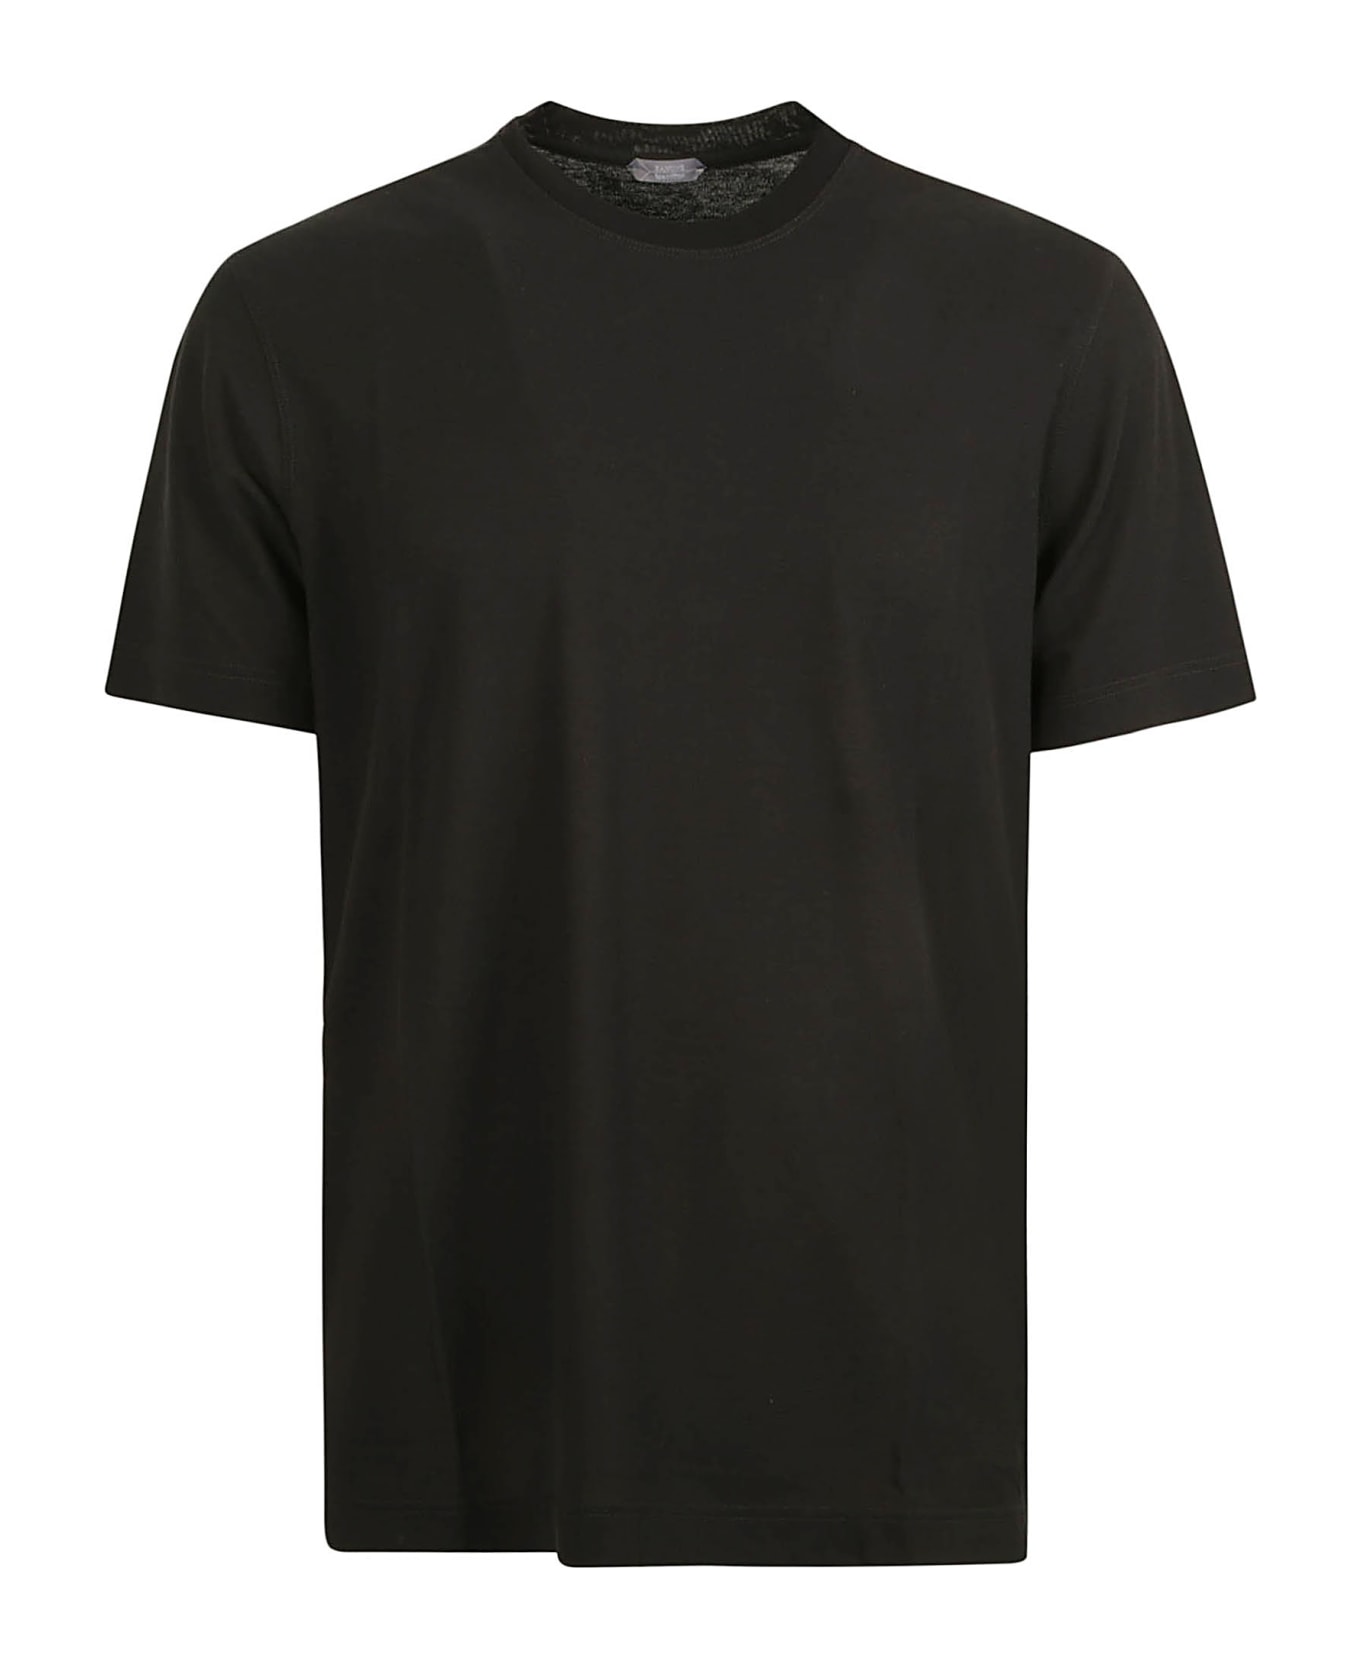 Zanone Round Neck Plain T-shirt - Black